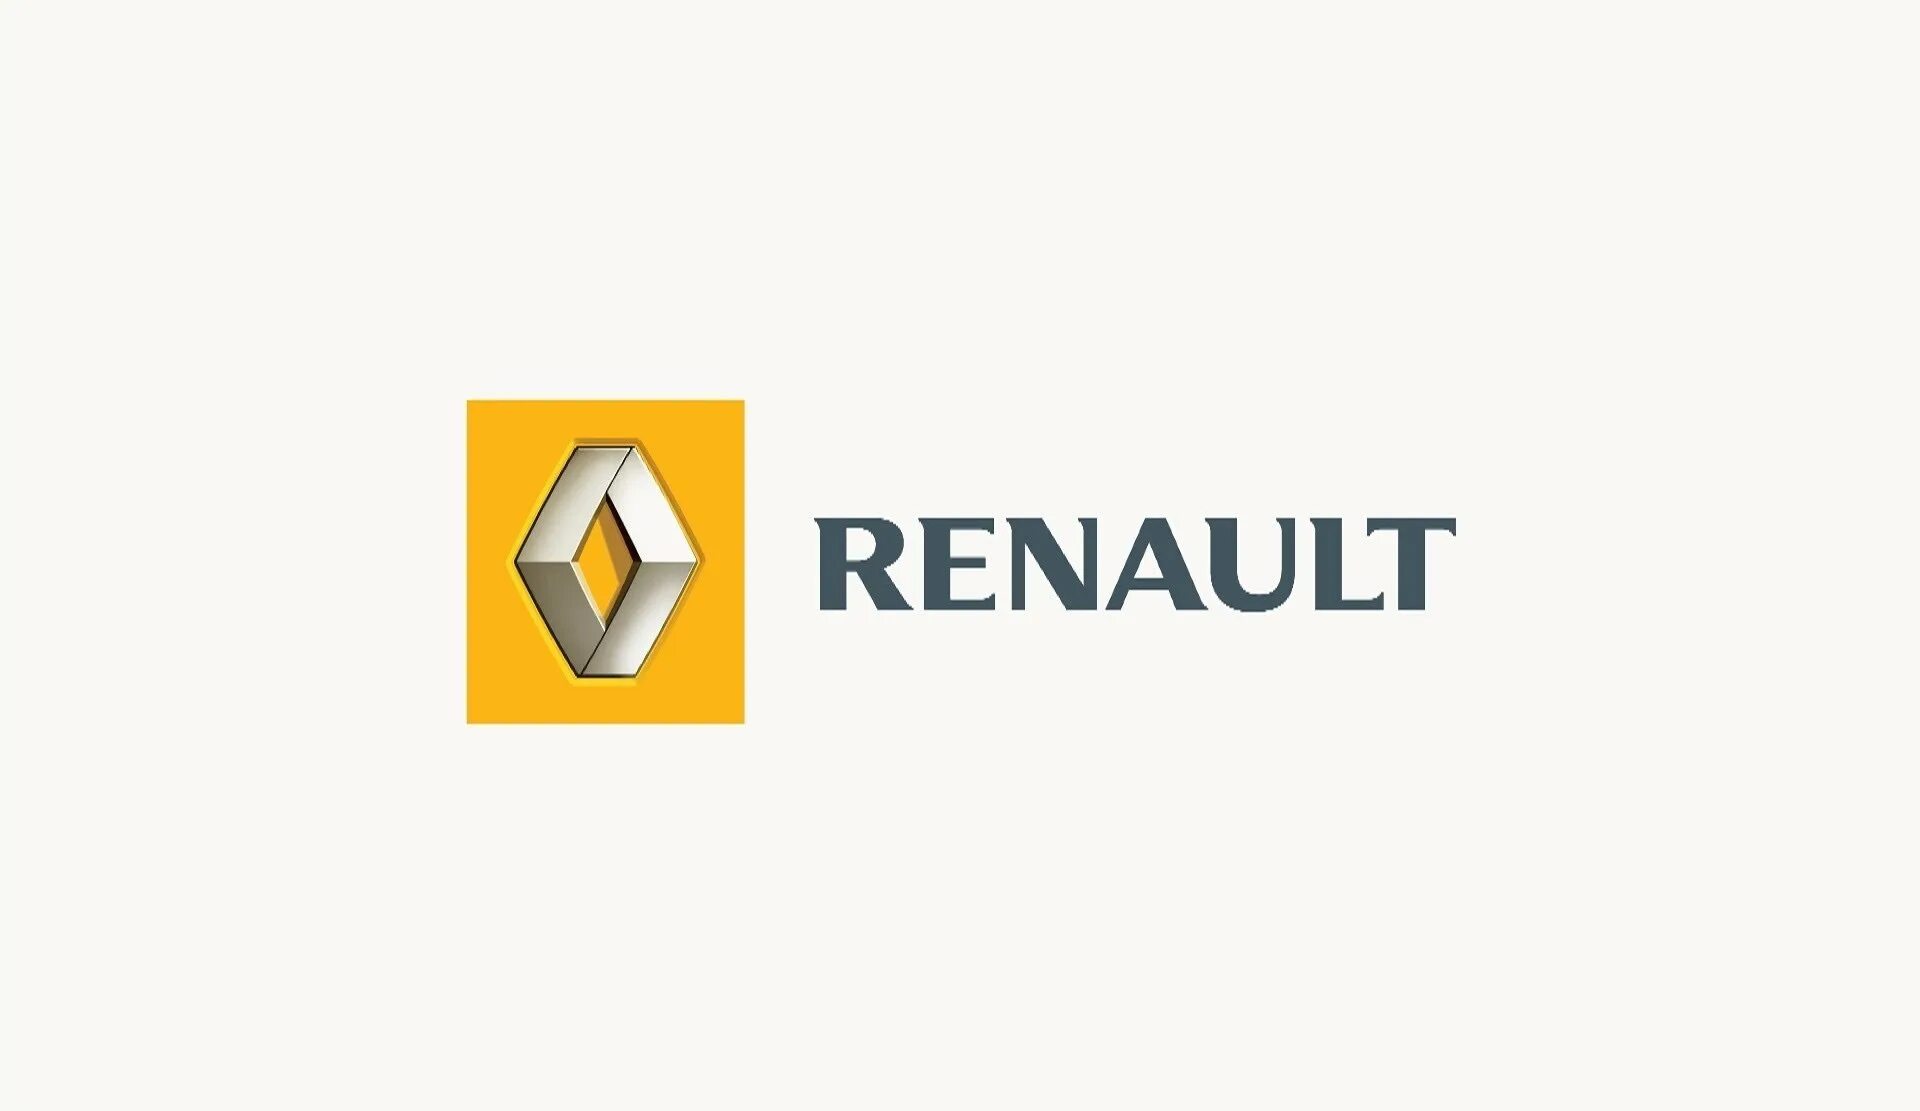 Renault group. Renault logo. Renault Group логотип. Фирменный знак Рено. Новый логотип Рено.